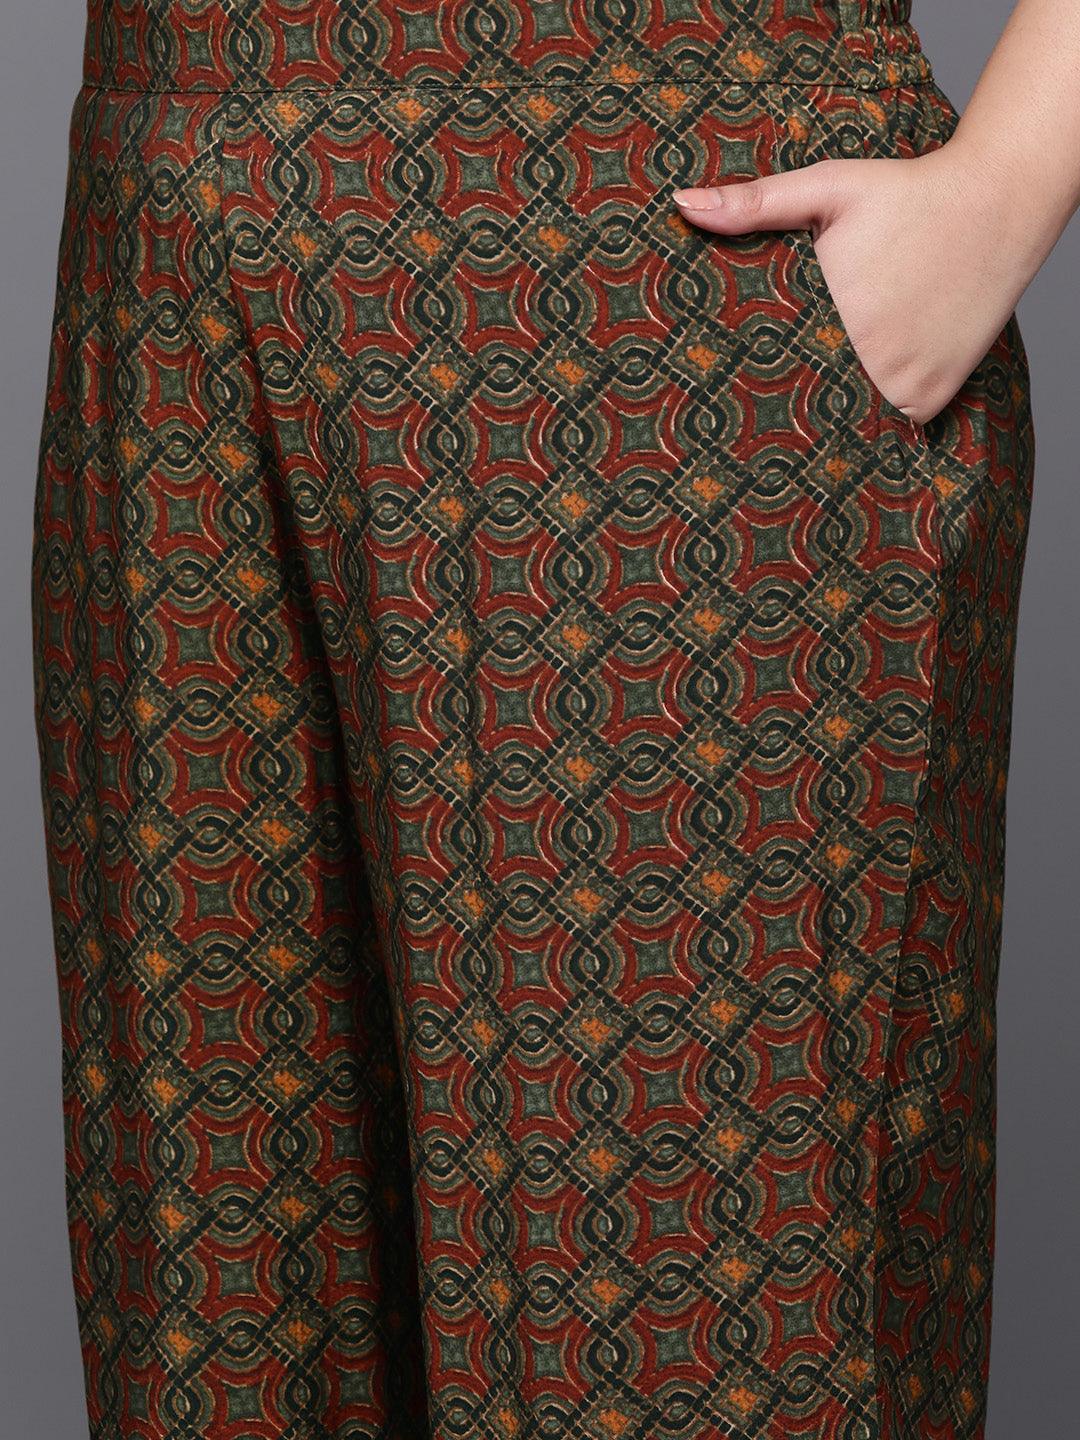 Plus Size Green Yoke Design Silk Blend Straight Suit With Dupatta